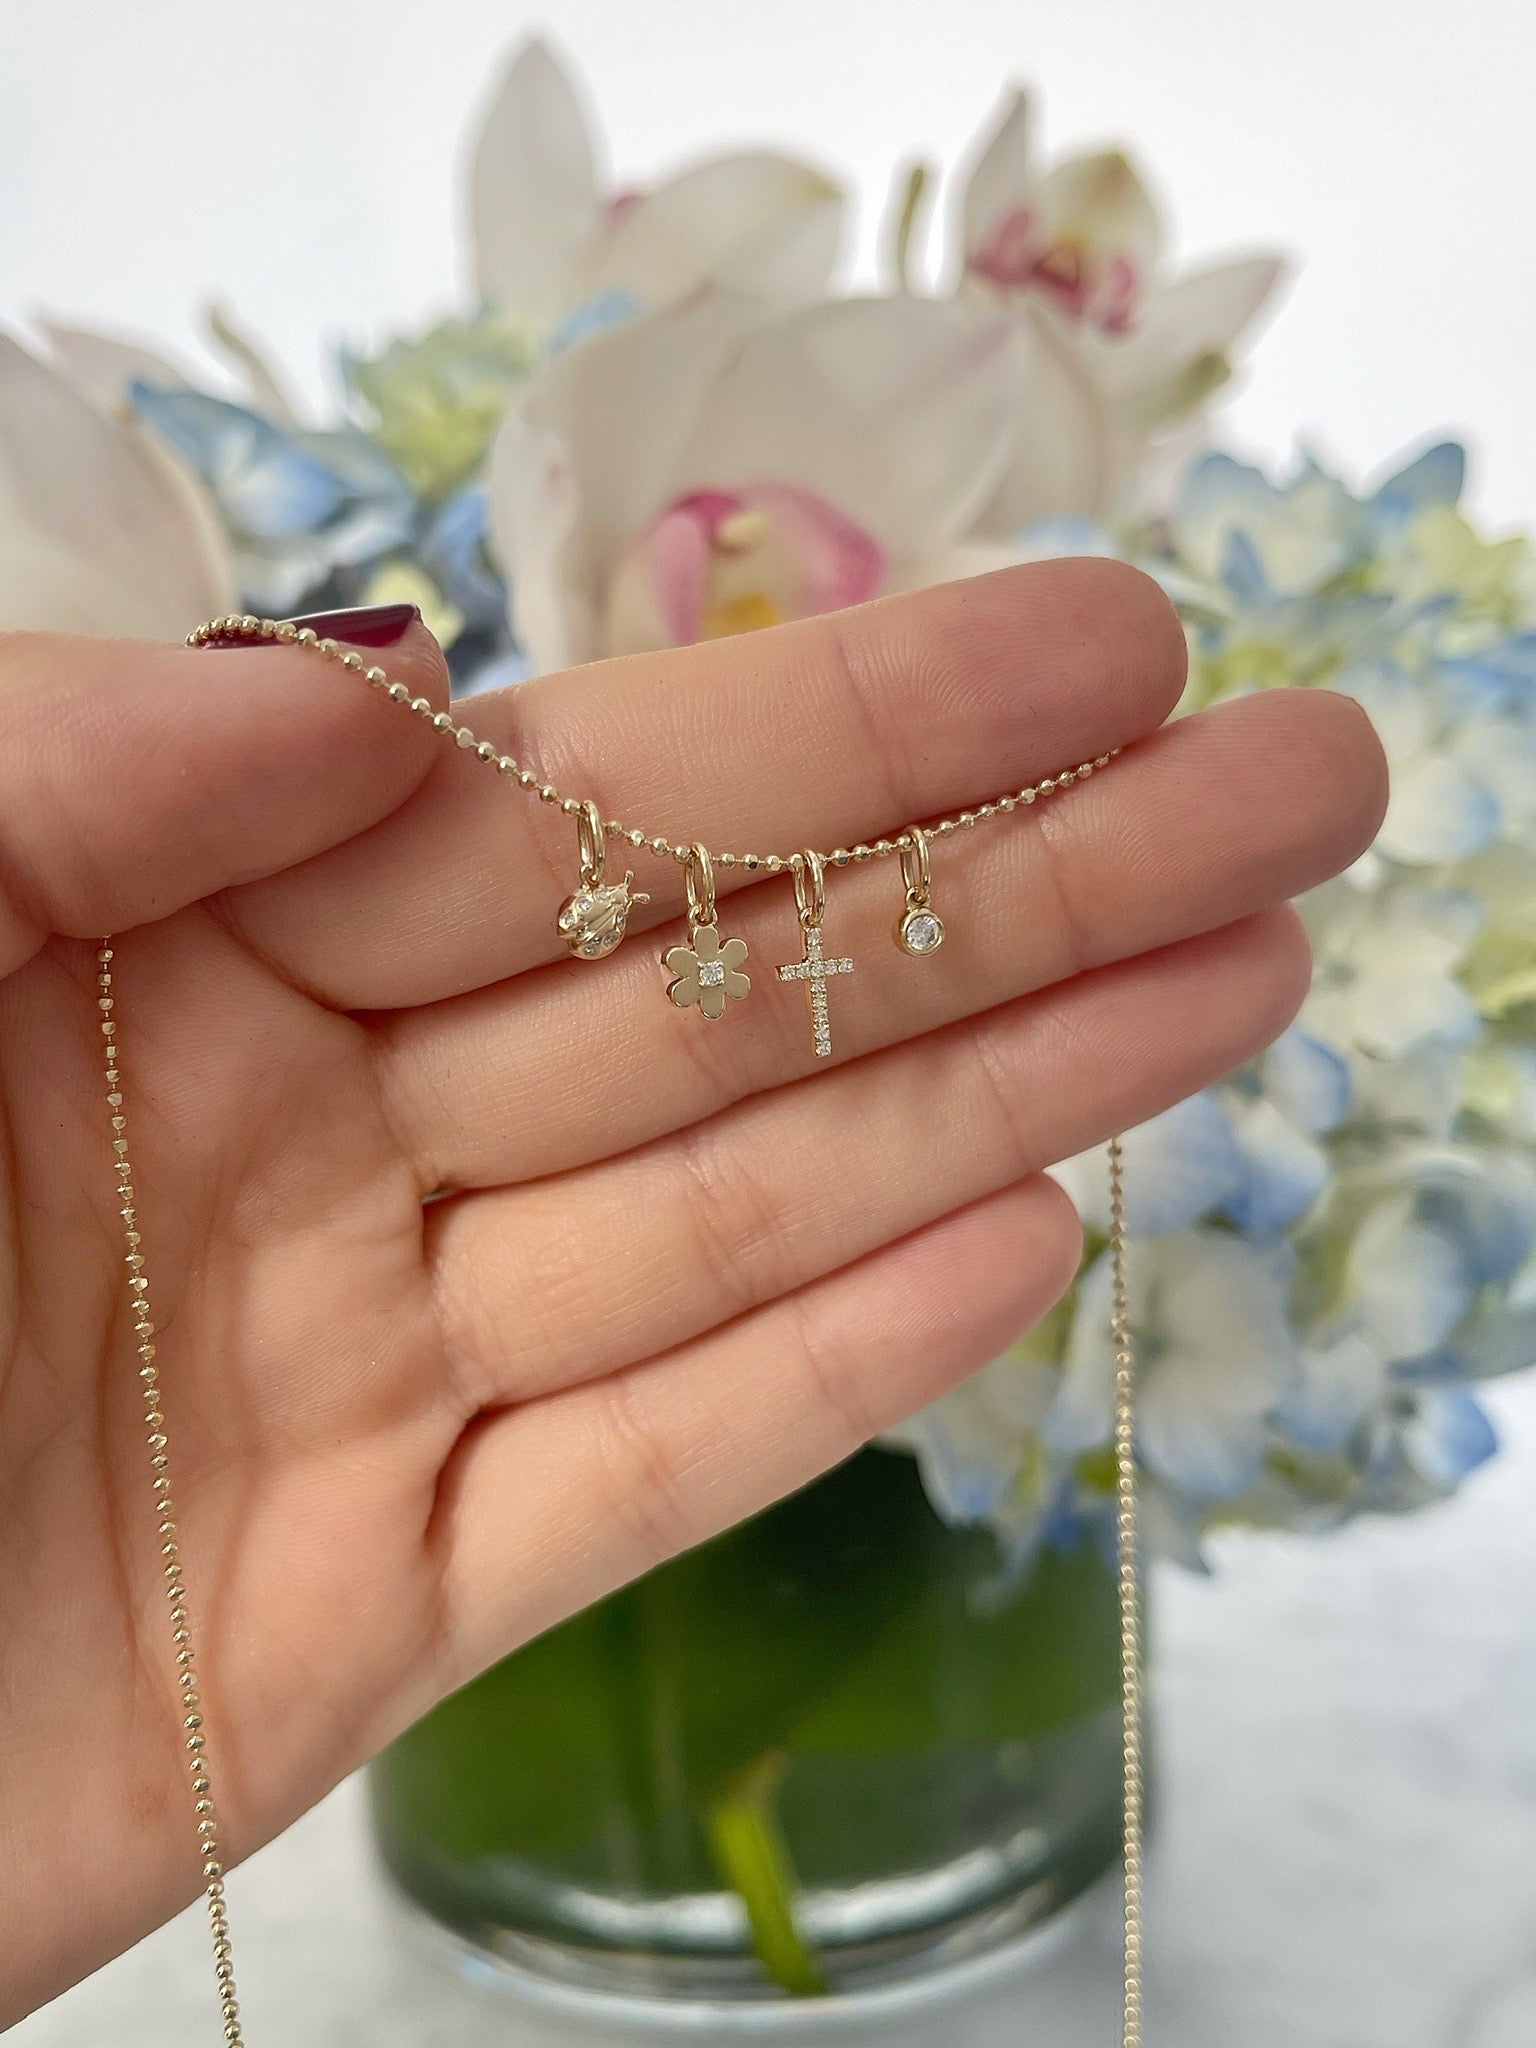 Diamond Cross Necklace Charm on charm necklace with three diamond charms